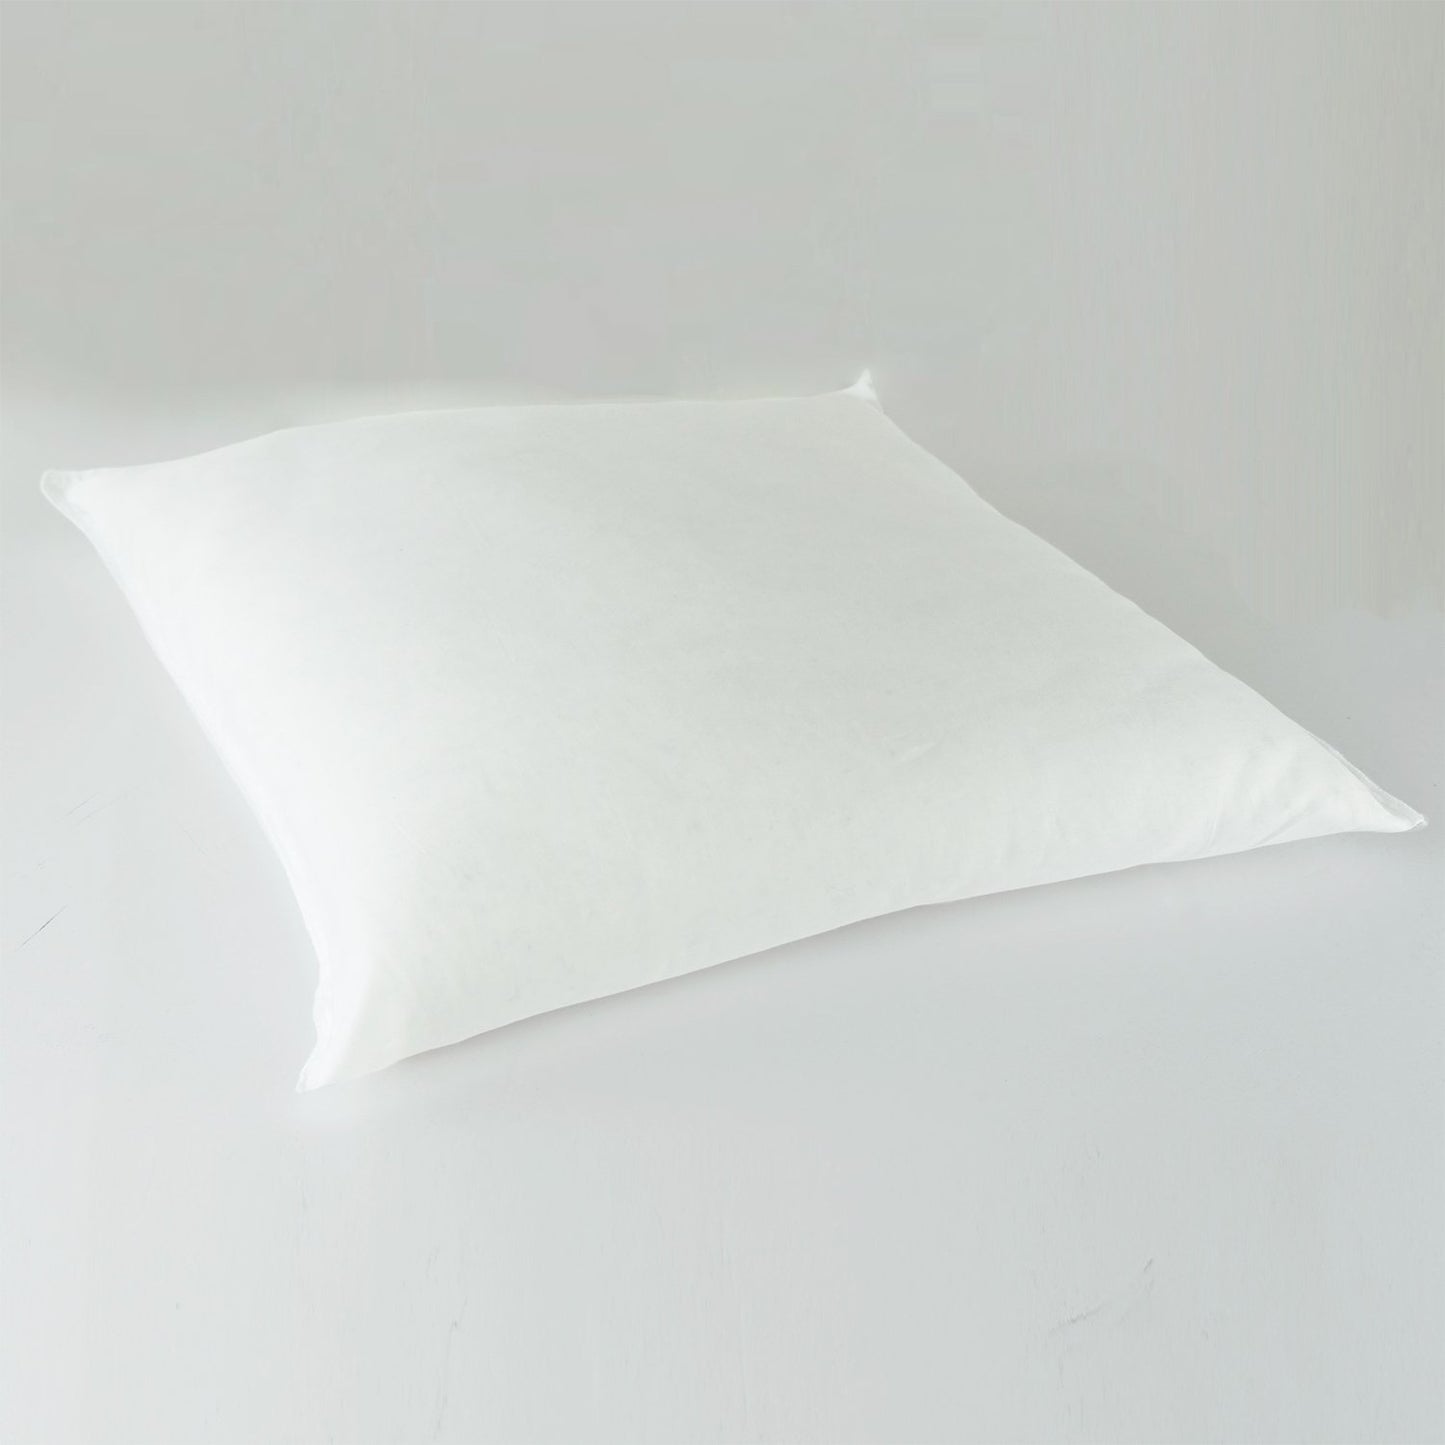 J-Life Toransu Navy Zabuton Floor Pillow_Pillows & Shams_Zabuton Floor Pillows_100% Cotton_Reversible_Handmade